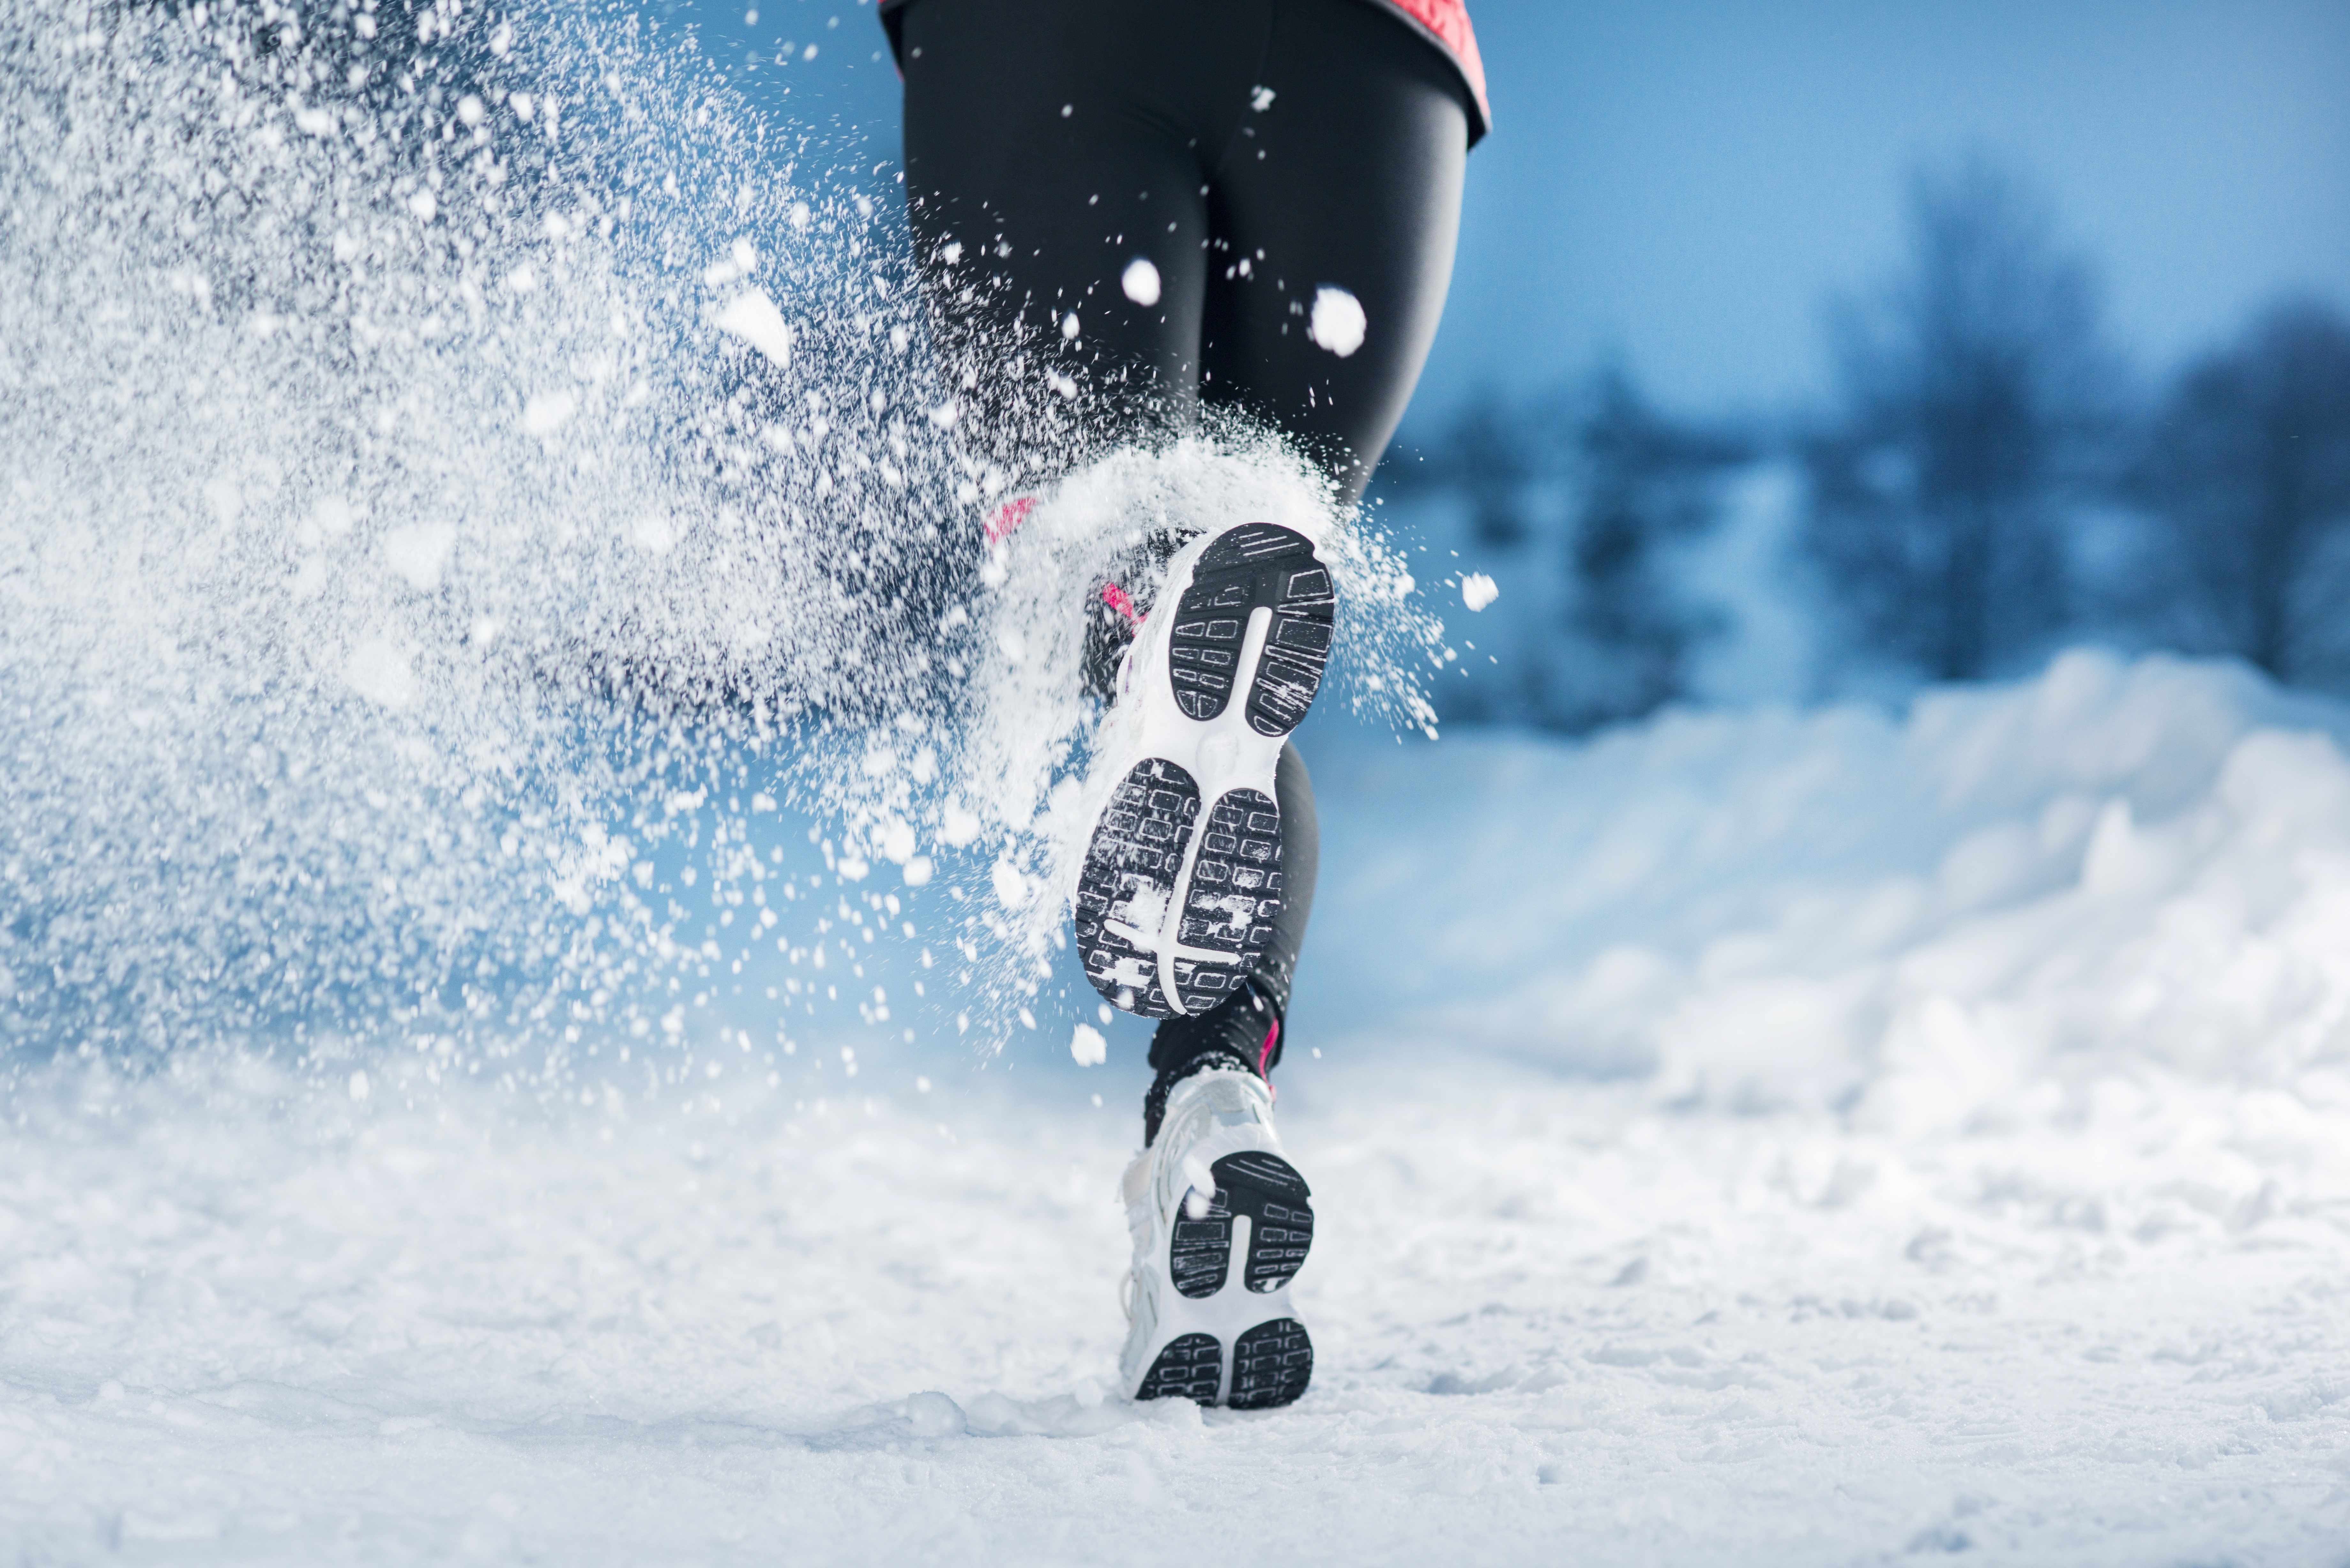 Январский утренний порой по снегу скрип веселый. Бег зимой. Зимняя пробежка. Зима спорт. Спорт зимой.